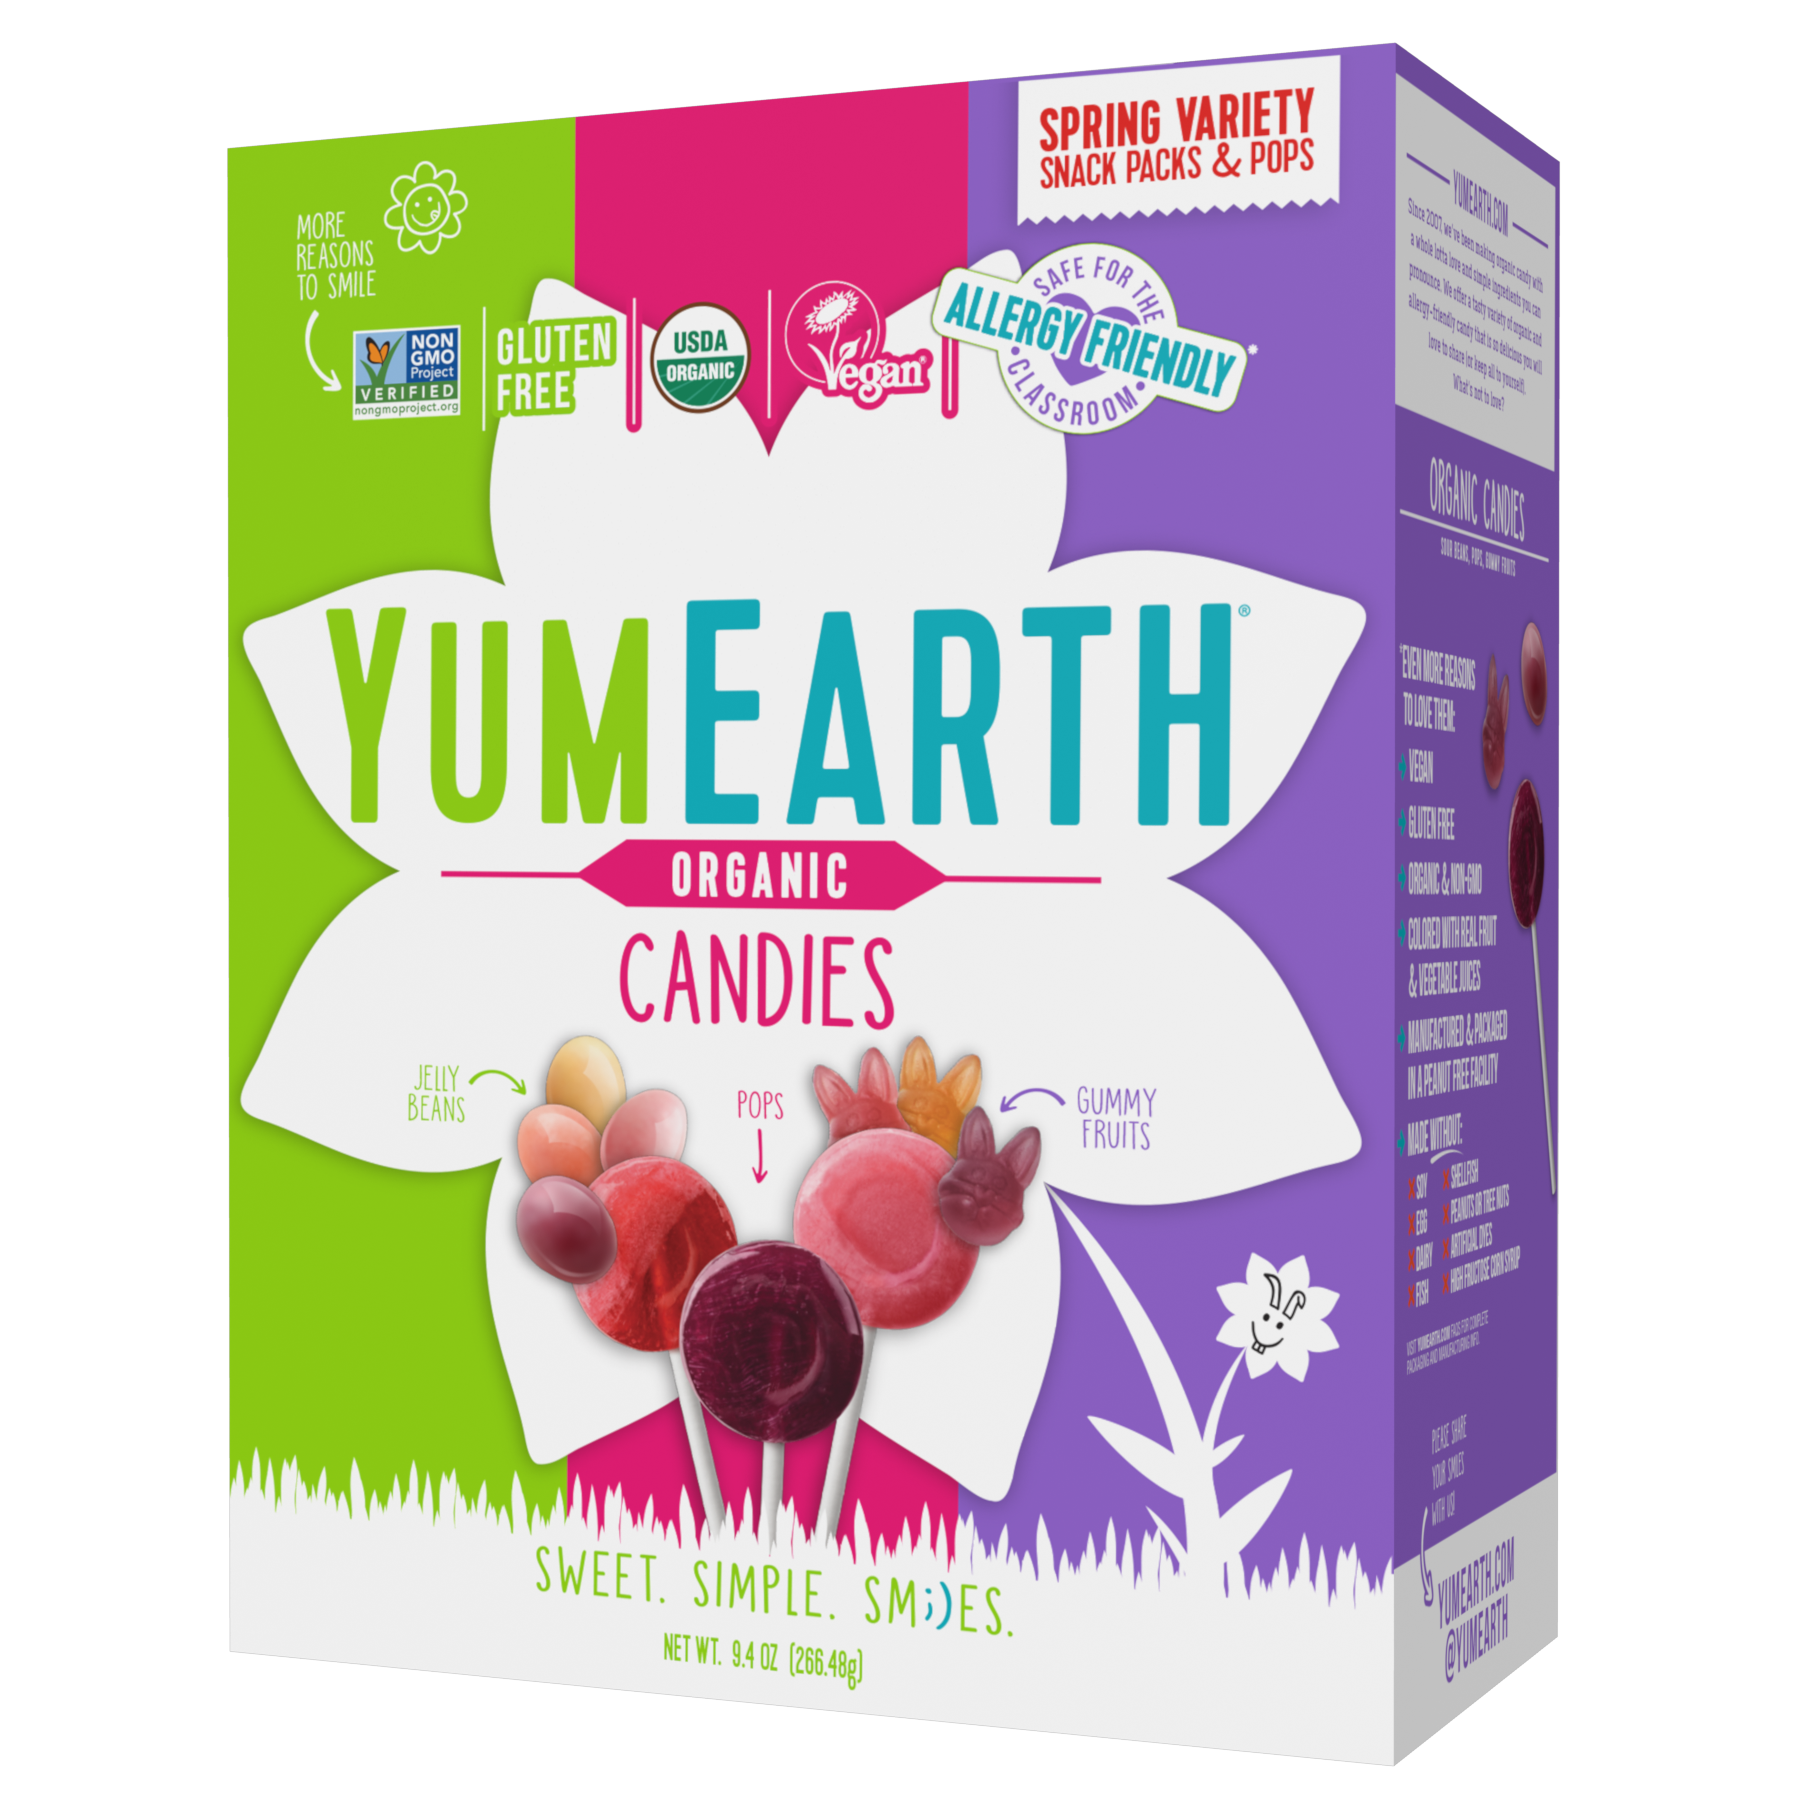 Yum Earth Organic Spring Variety Pack- Snack Packs & Pops 266.48g